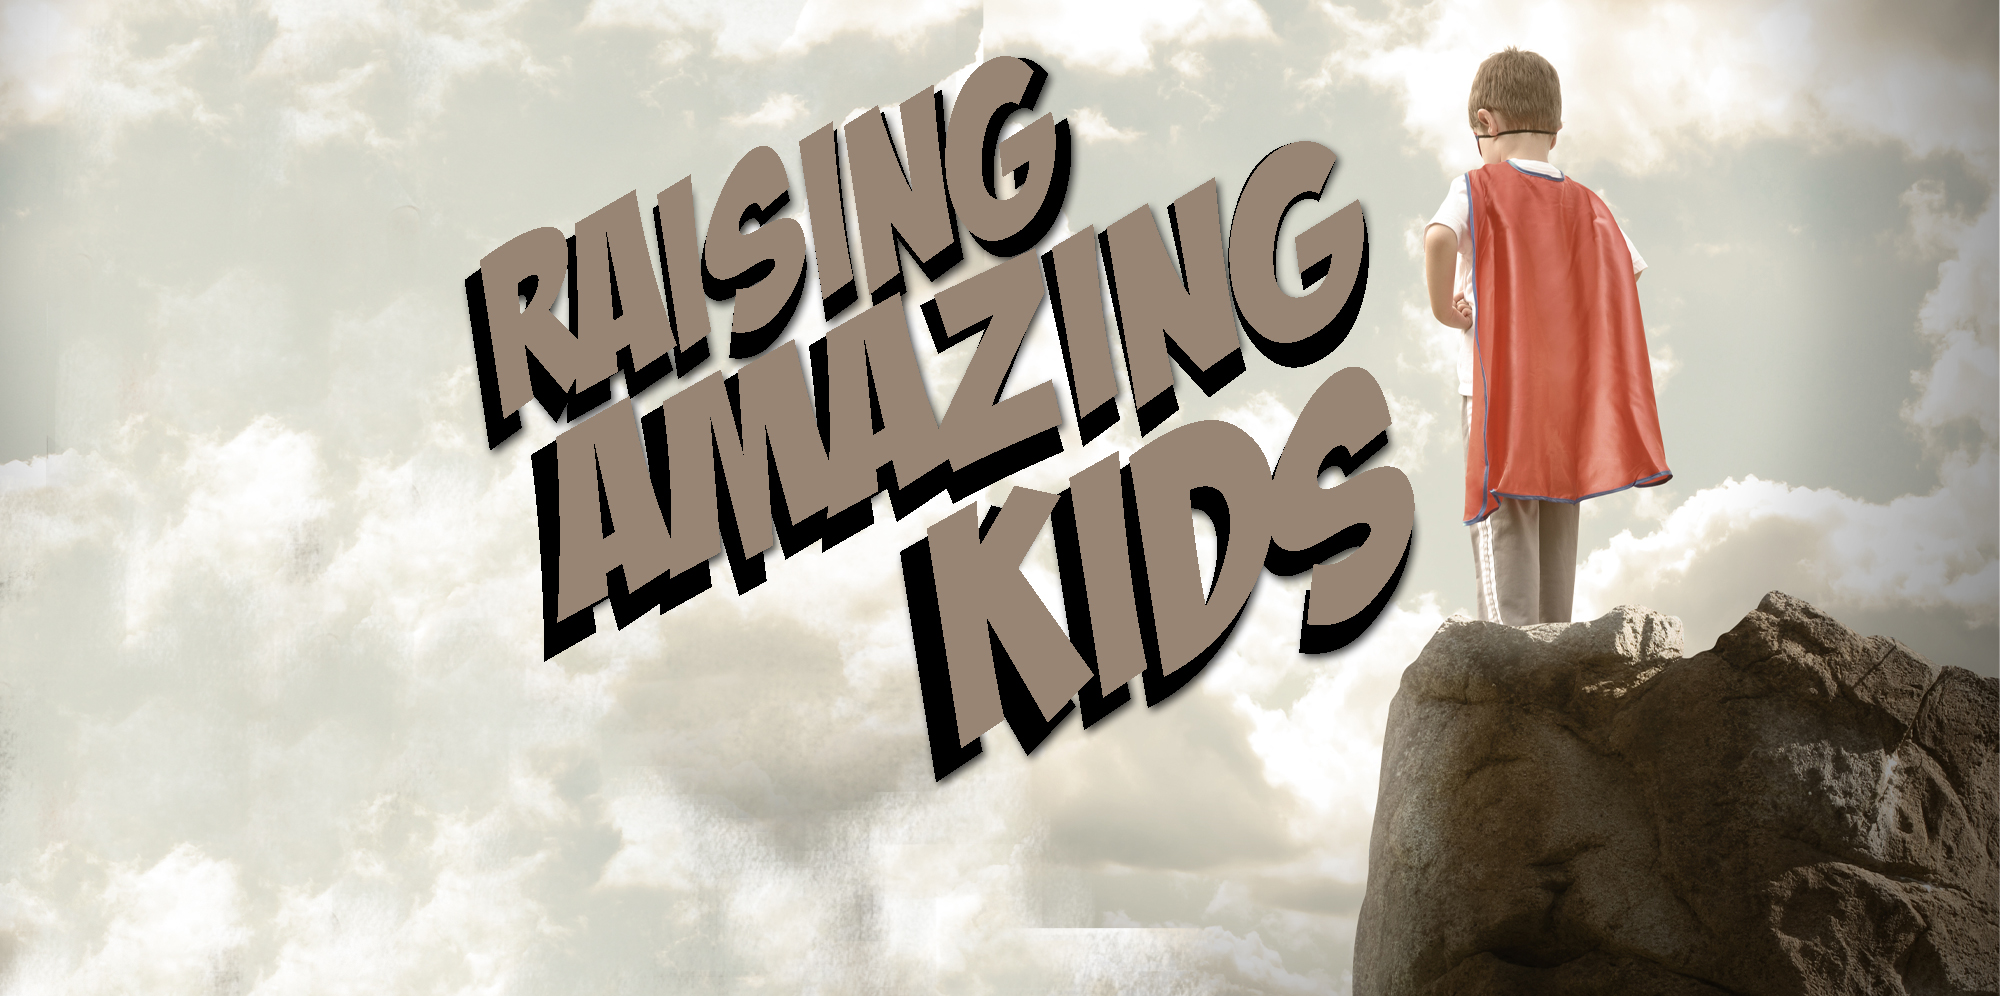 09-15-13 Raising Amazing Kids - Part 1 - The Spiritual Foundation For Successful Children